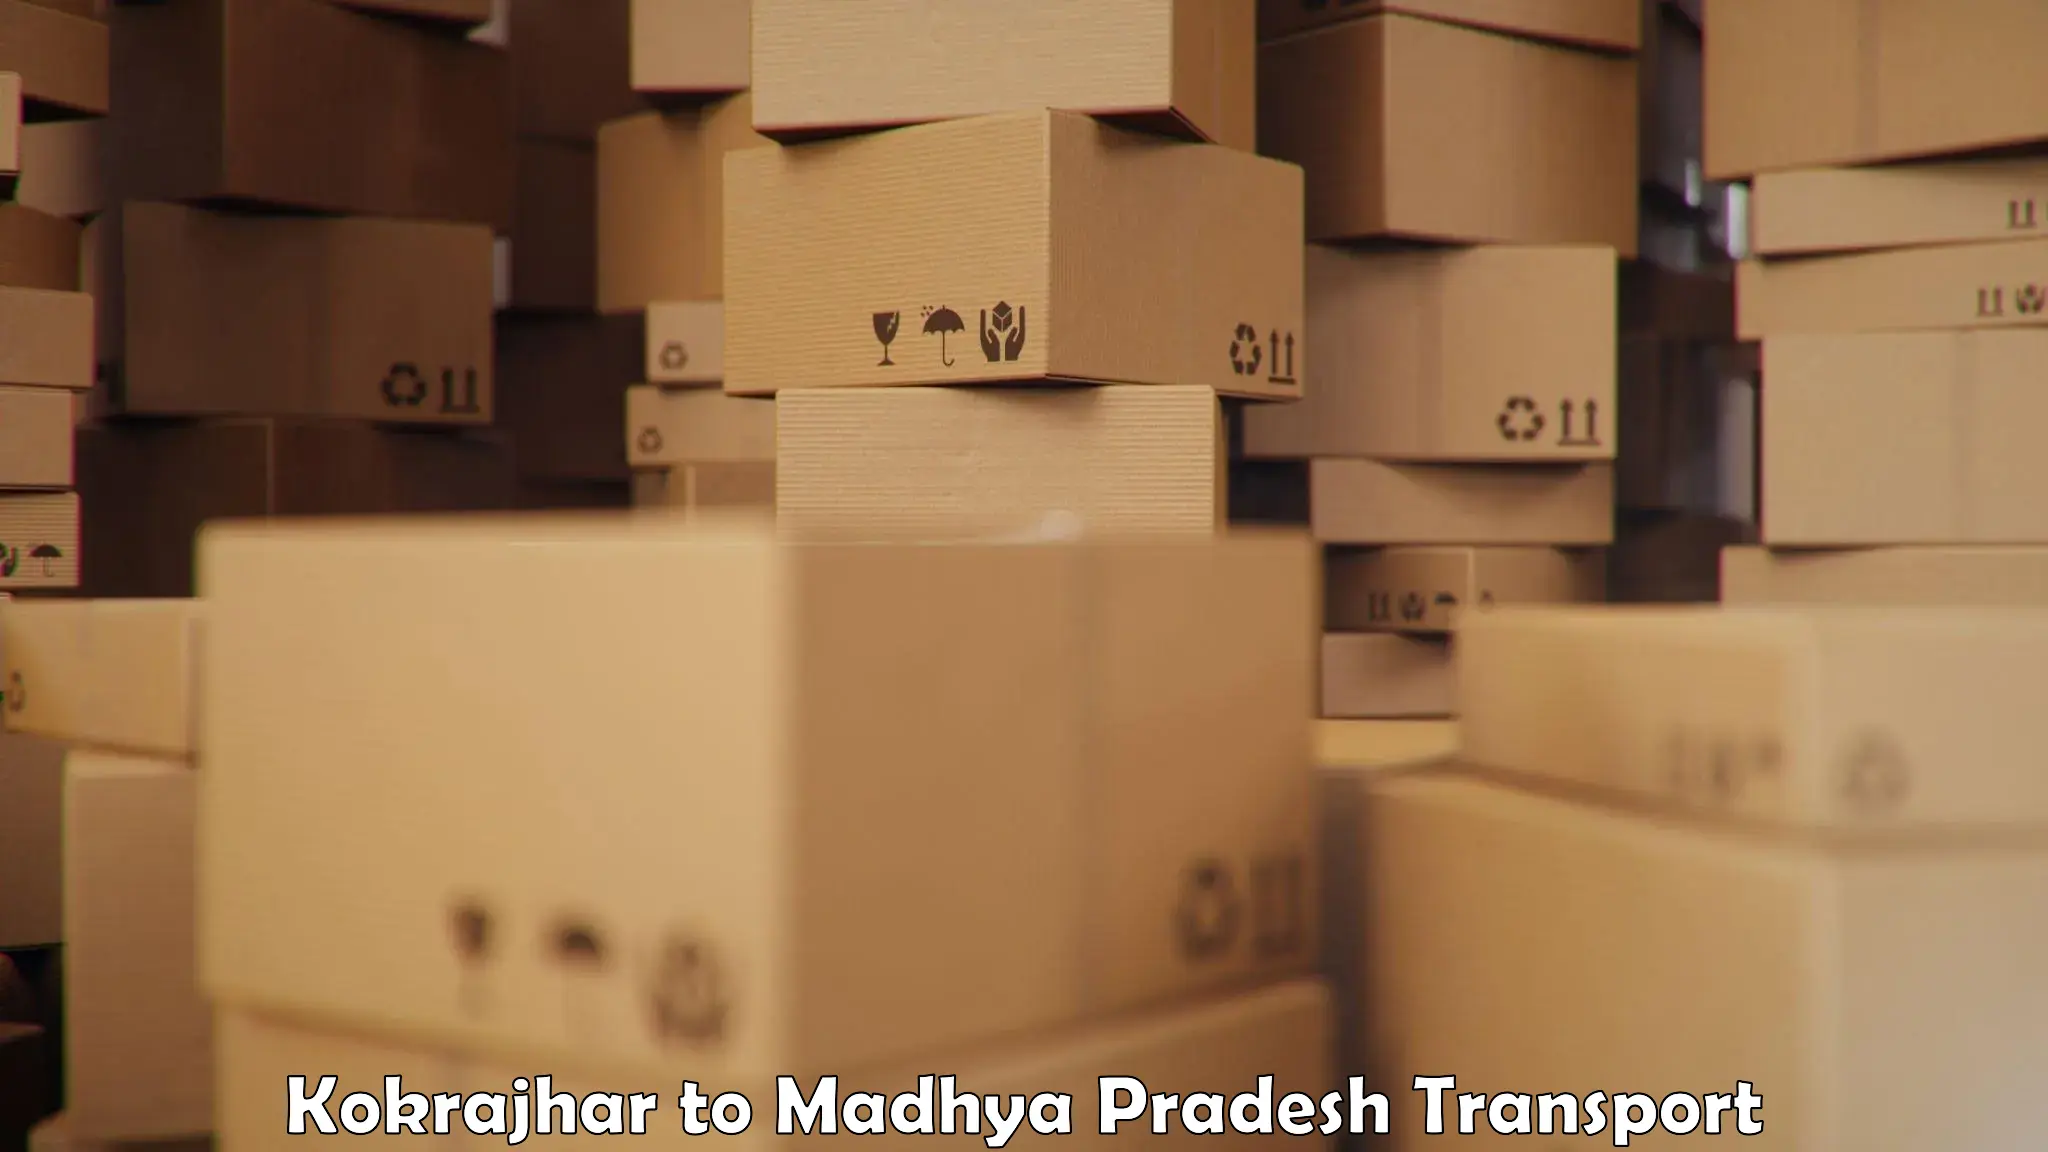 Truck transport companies in India Kokrajhar to Amanganj